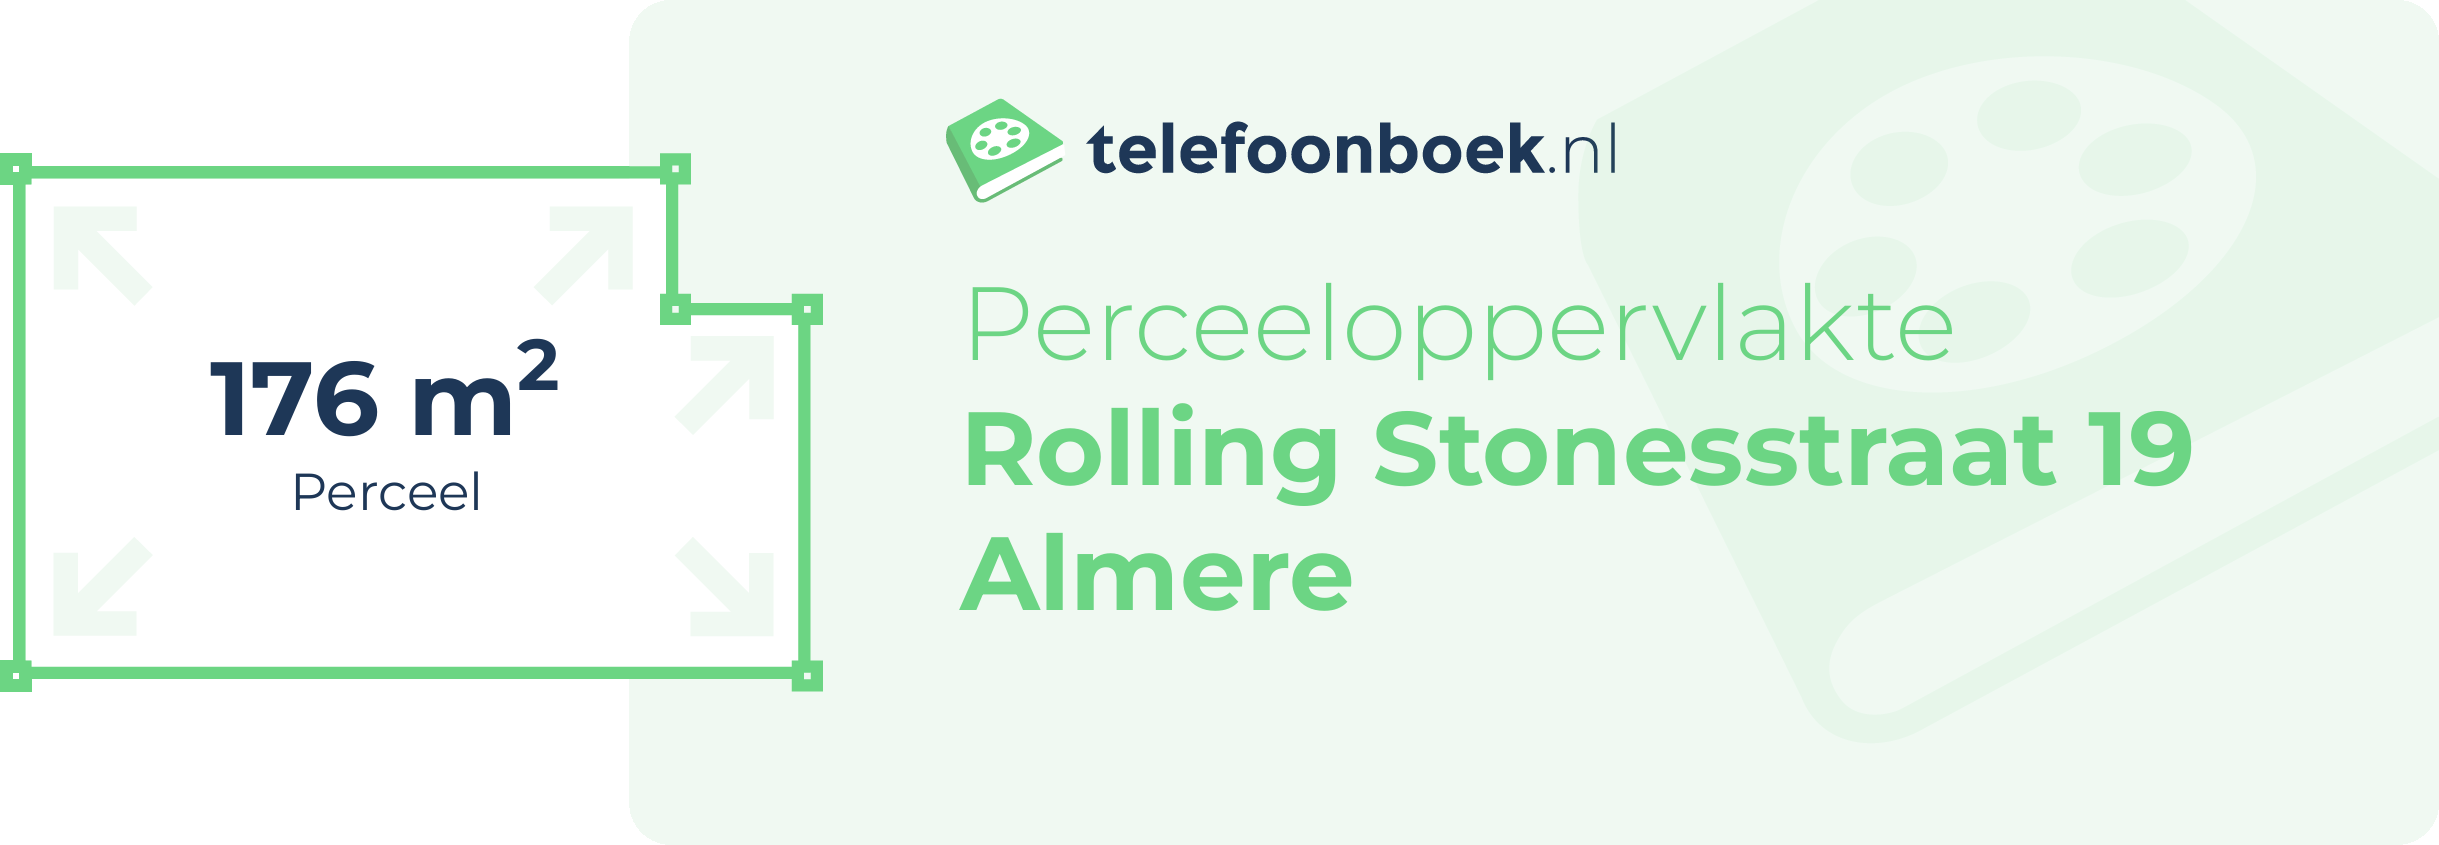 Perceeloppervlakte Rolling Stonesstraat 19 Almere